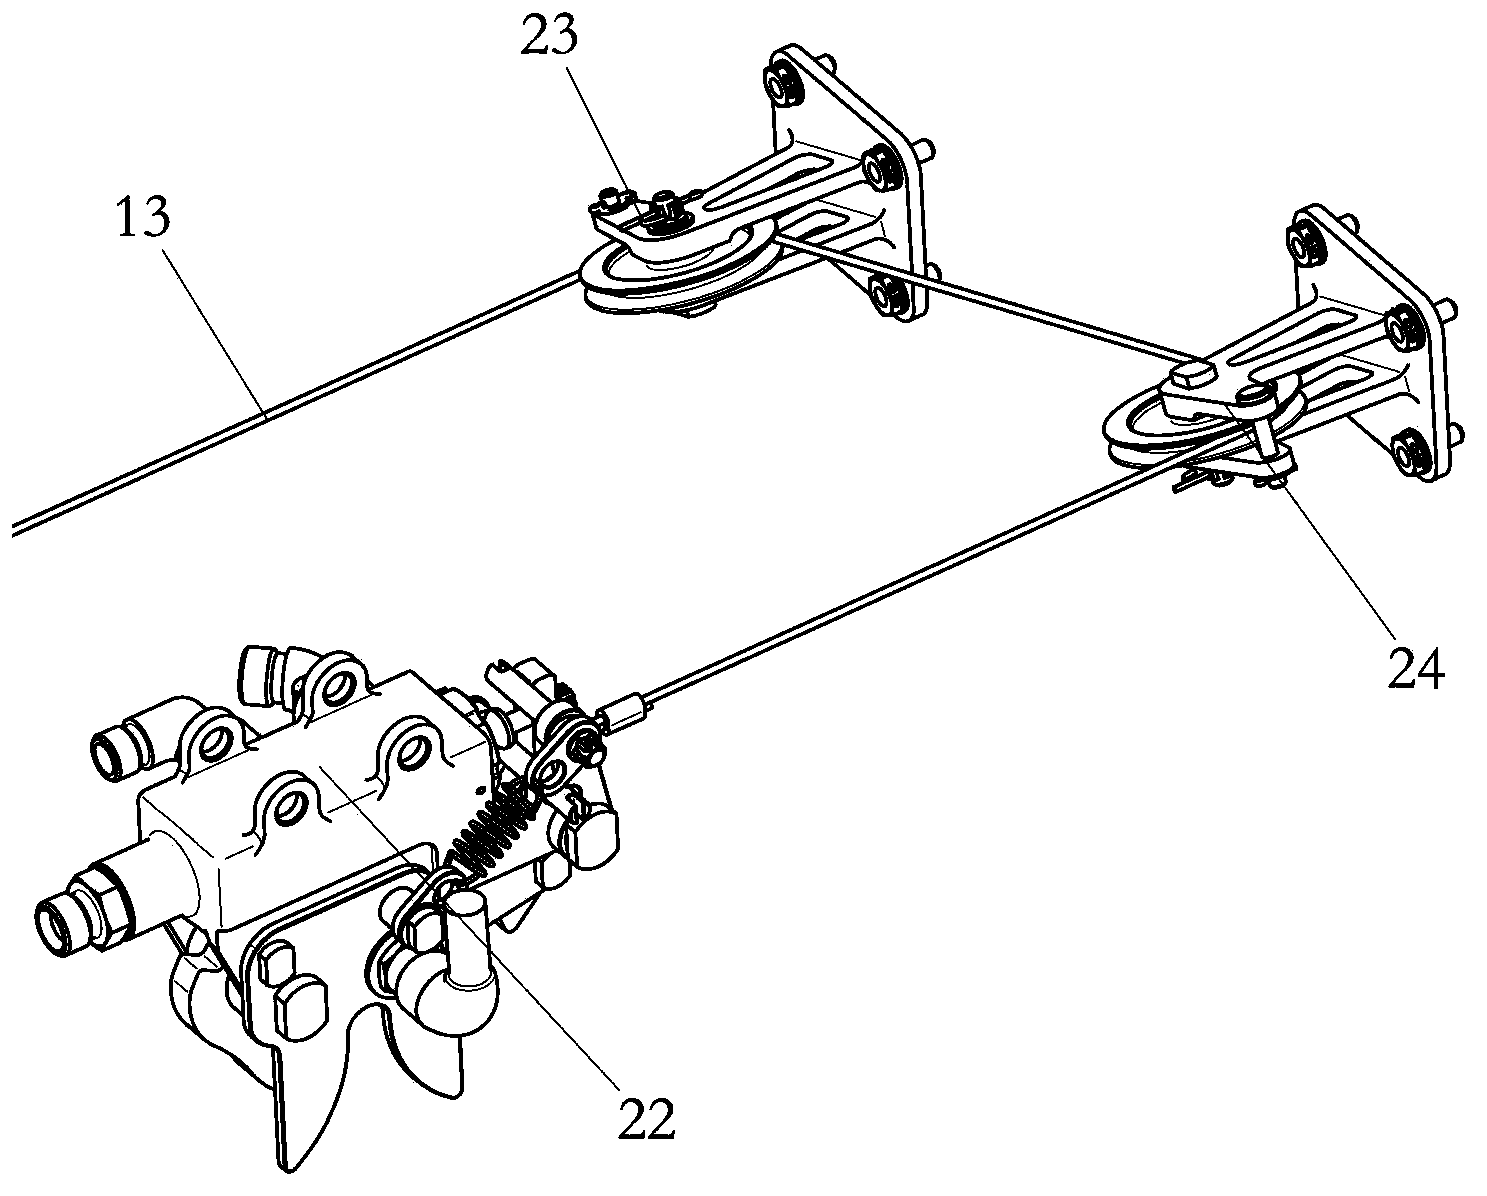 Manual jettisoning system of landing gear